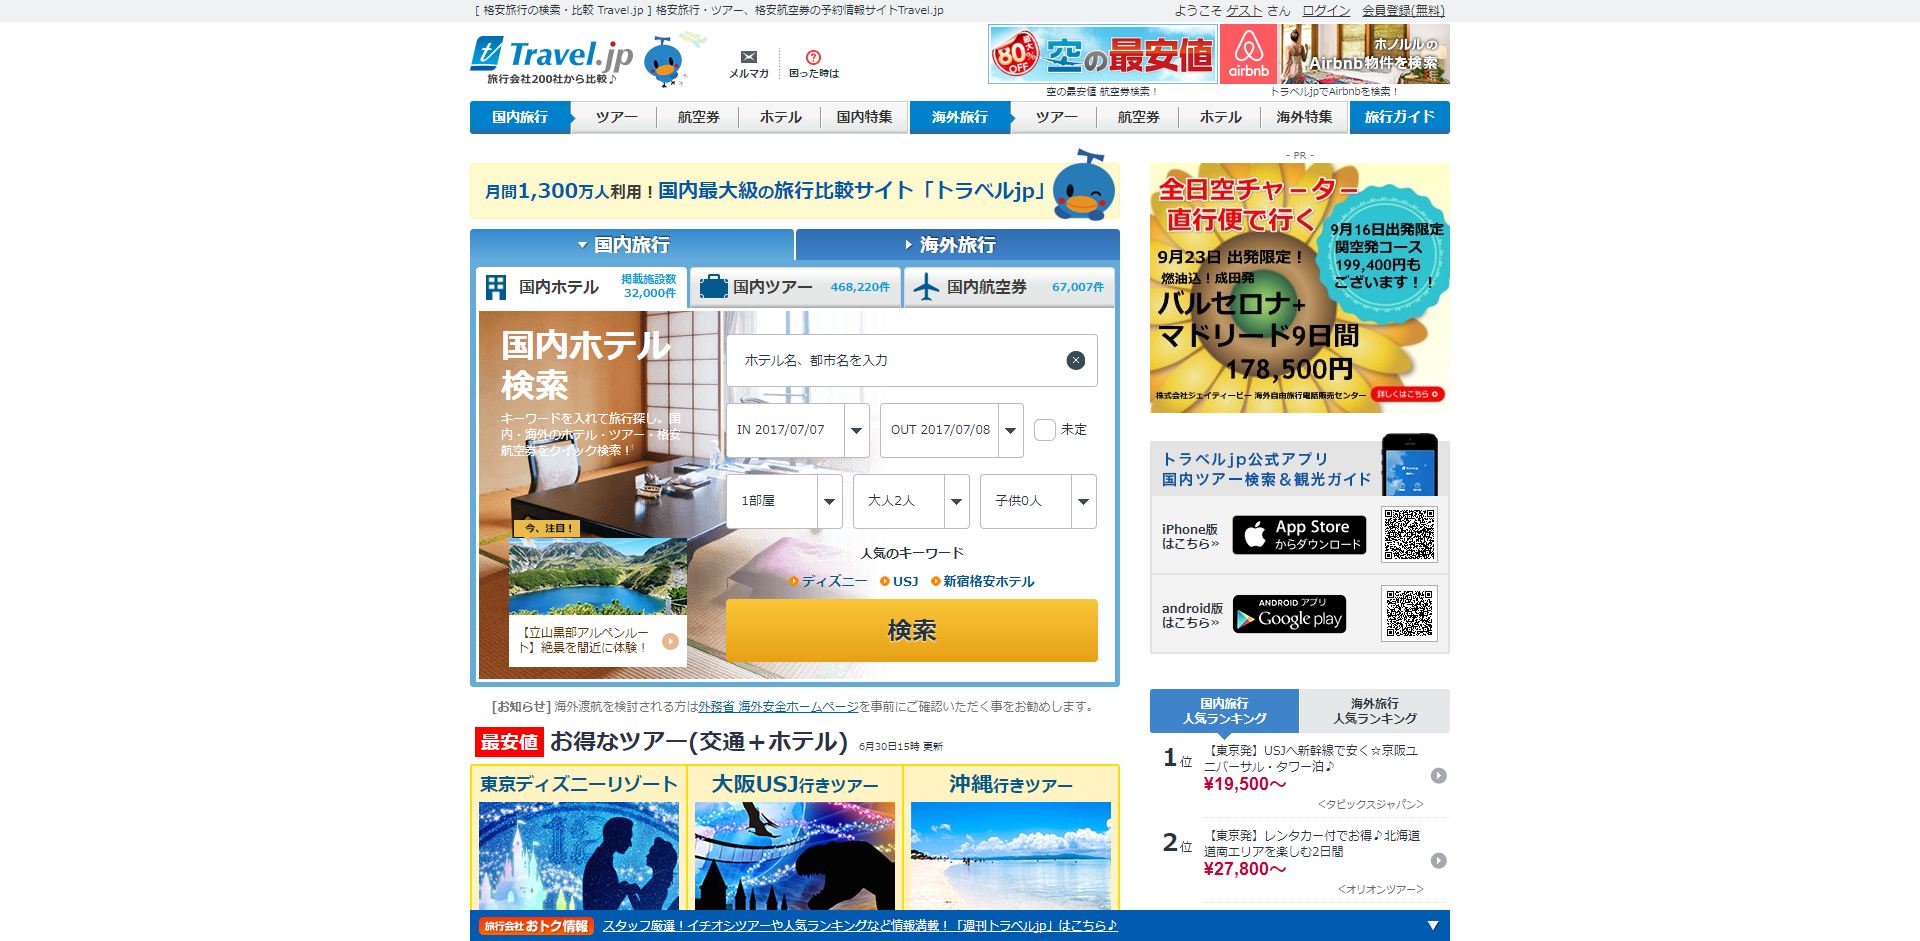 「Travel.jp」の公式サイト